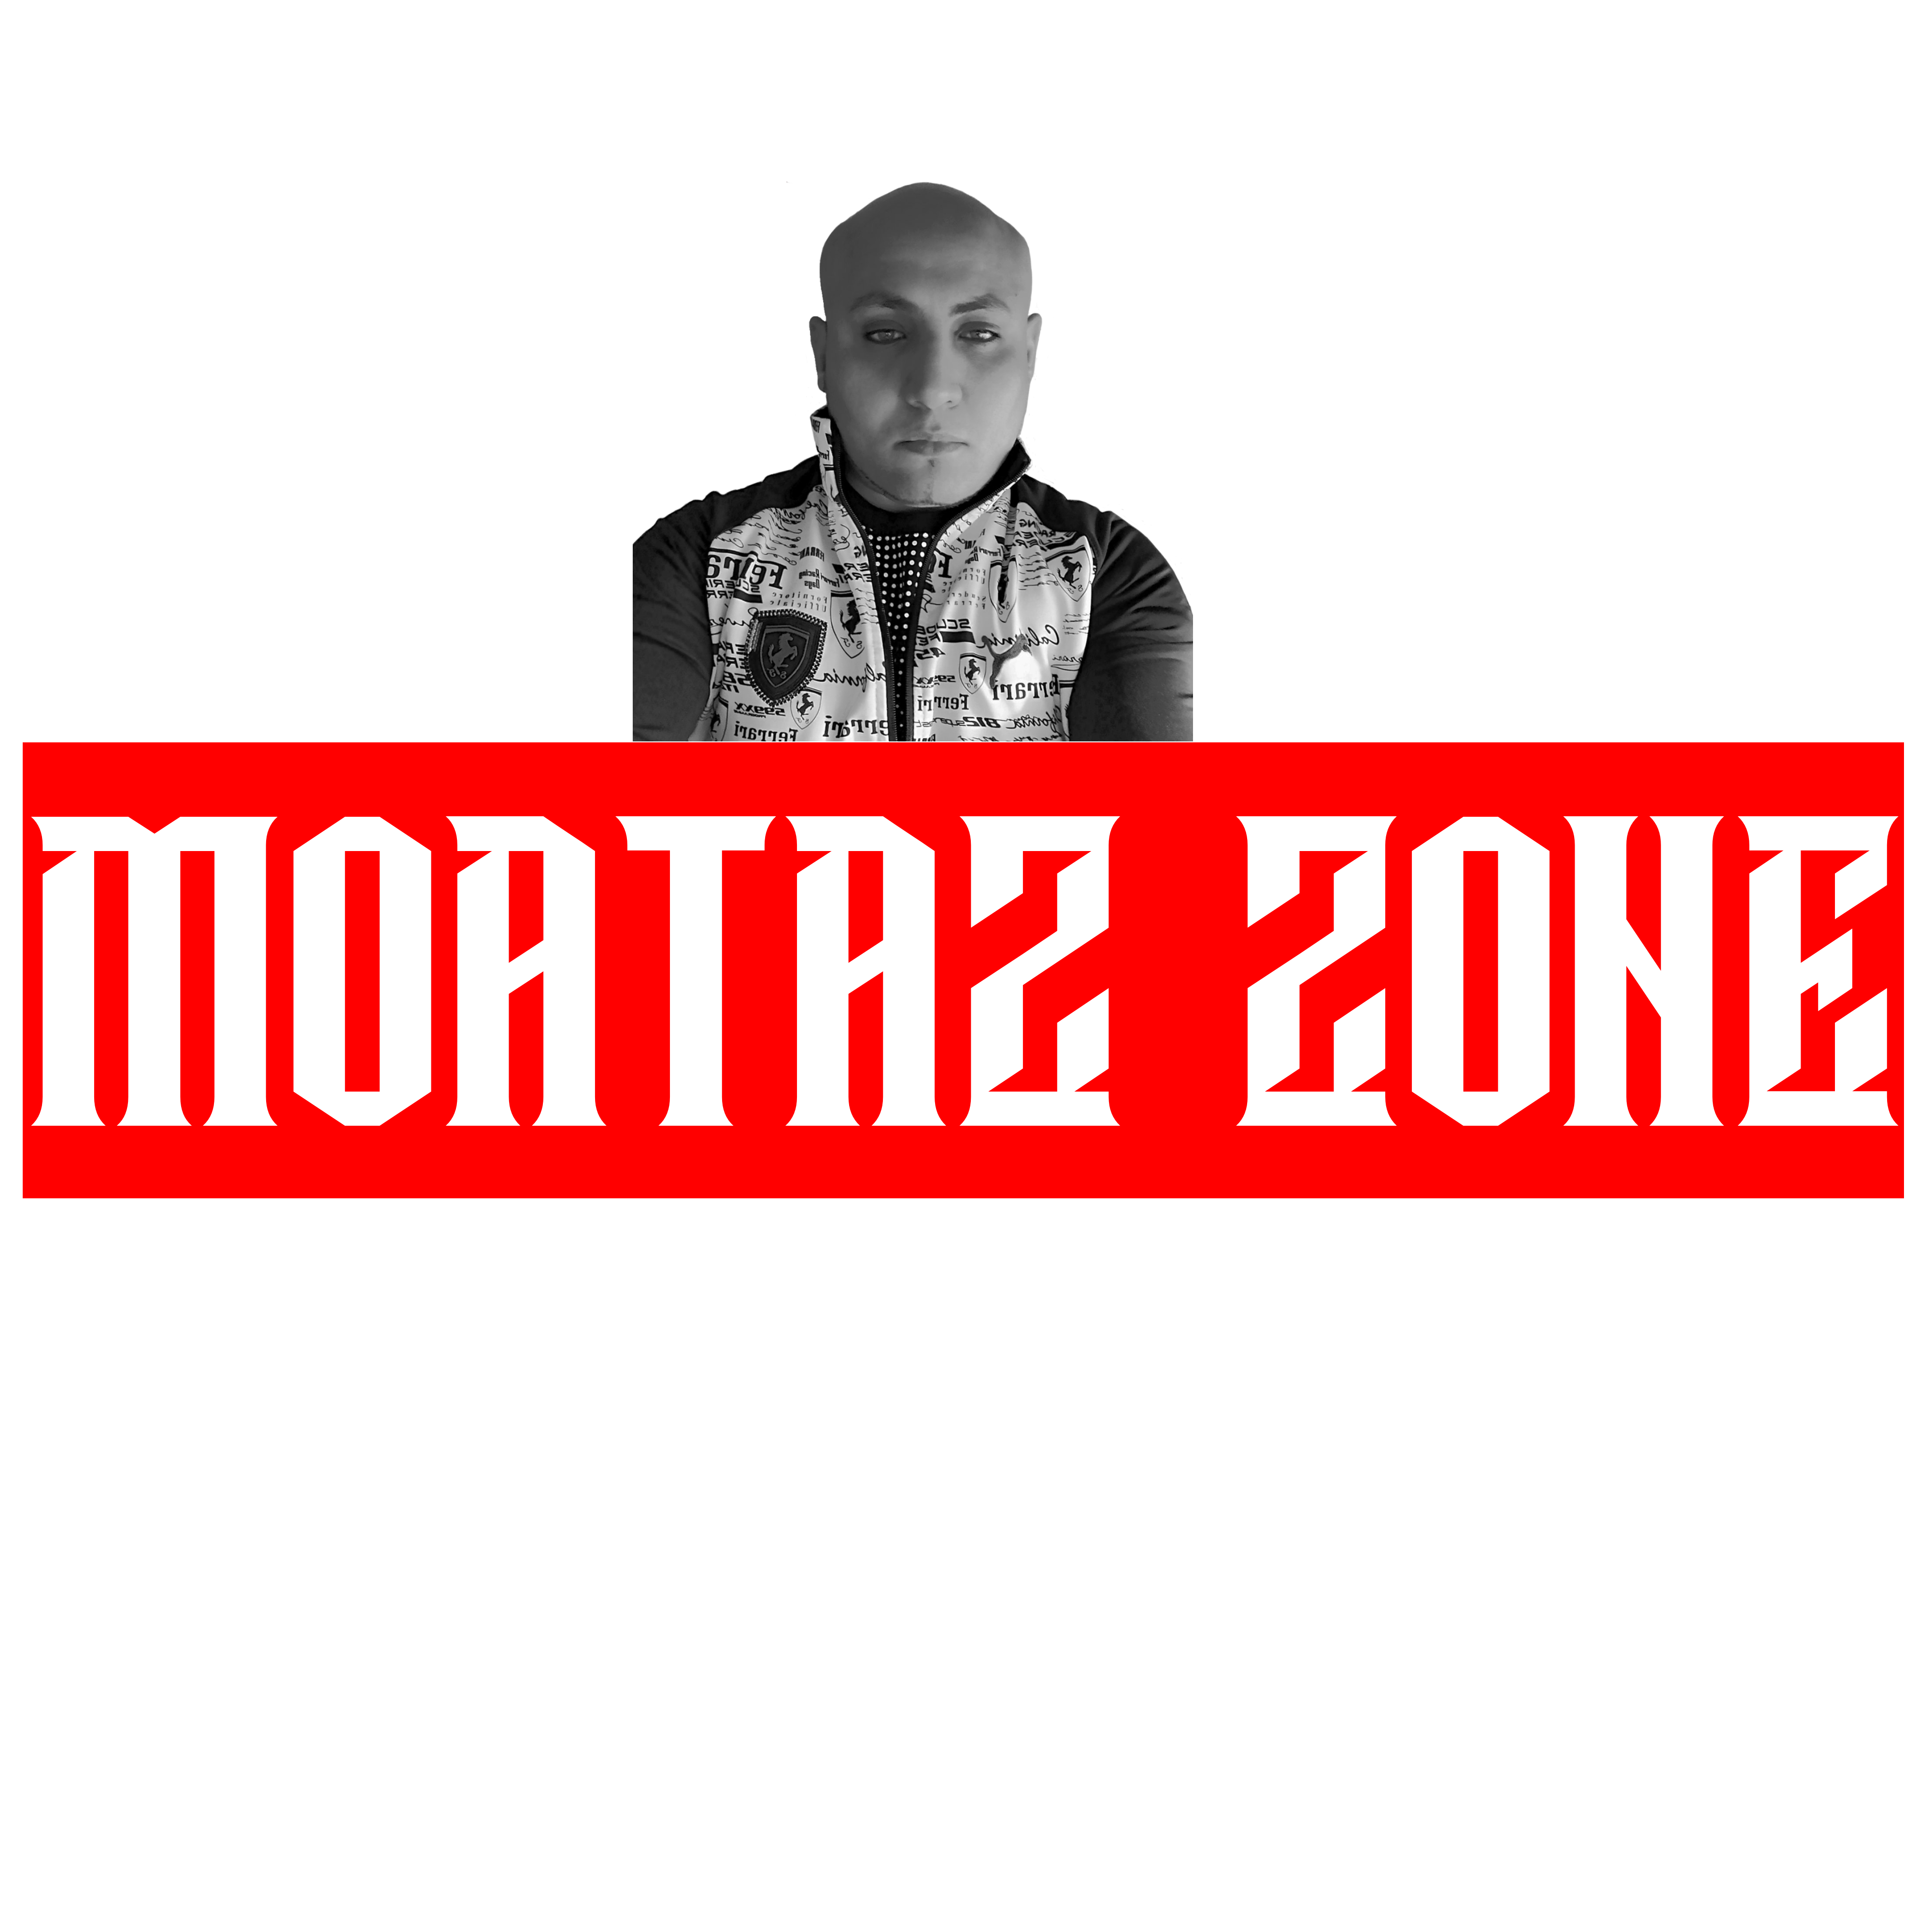 Moataz Zone